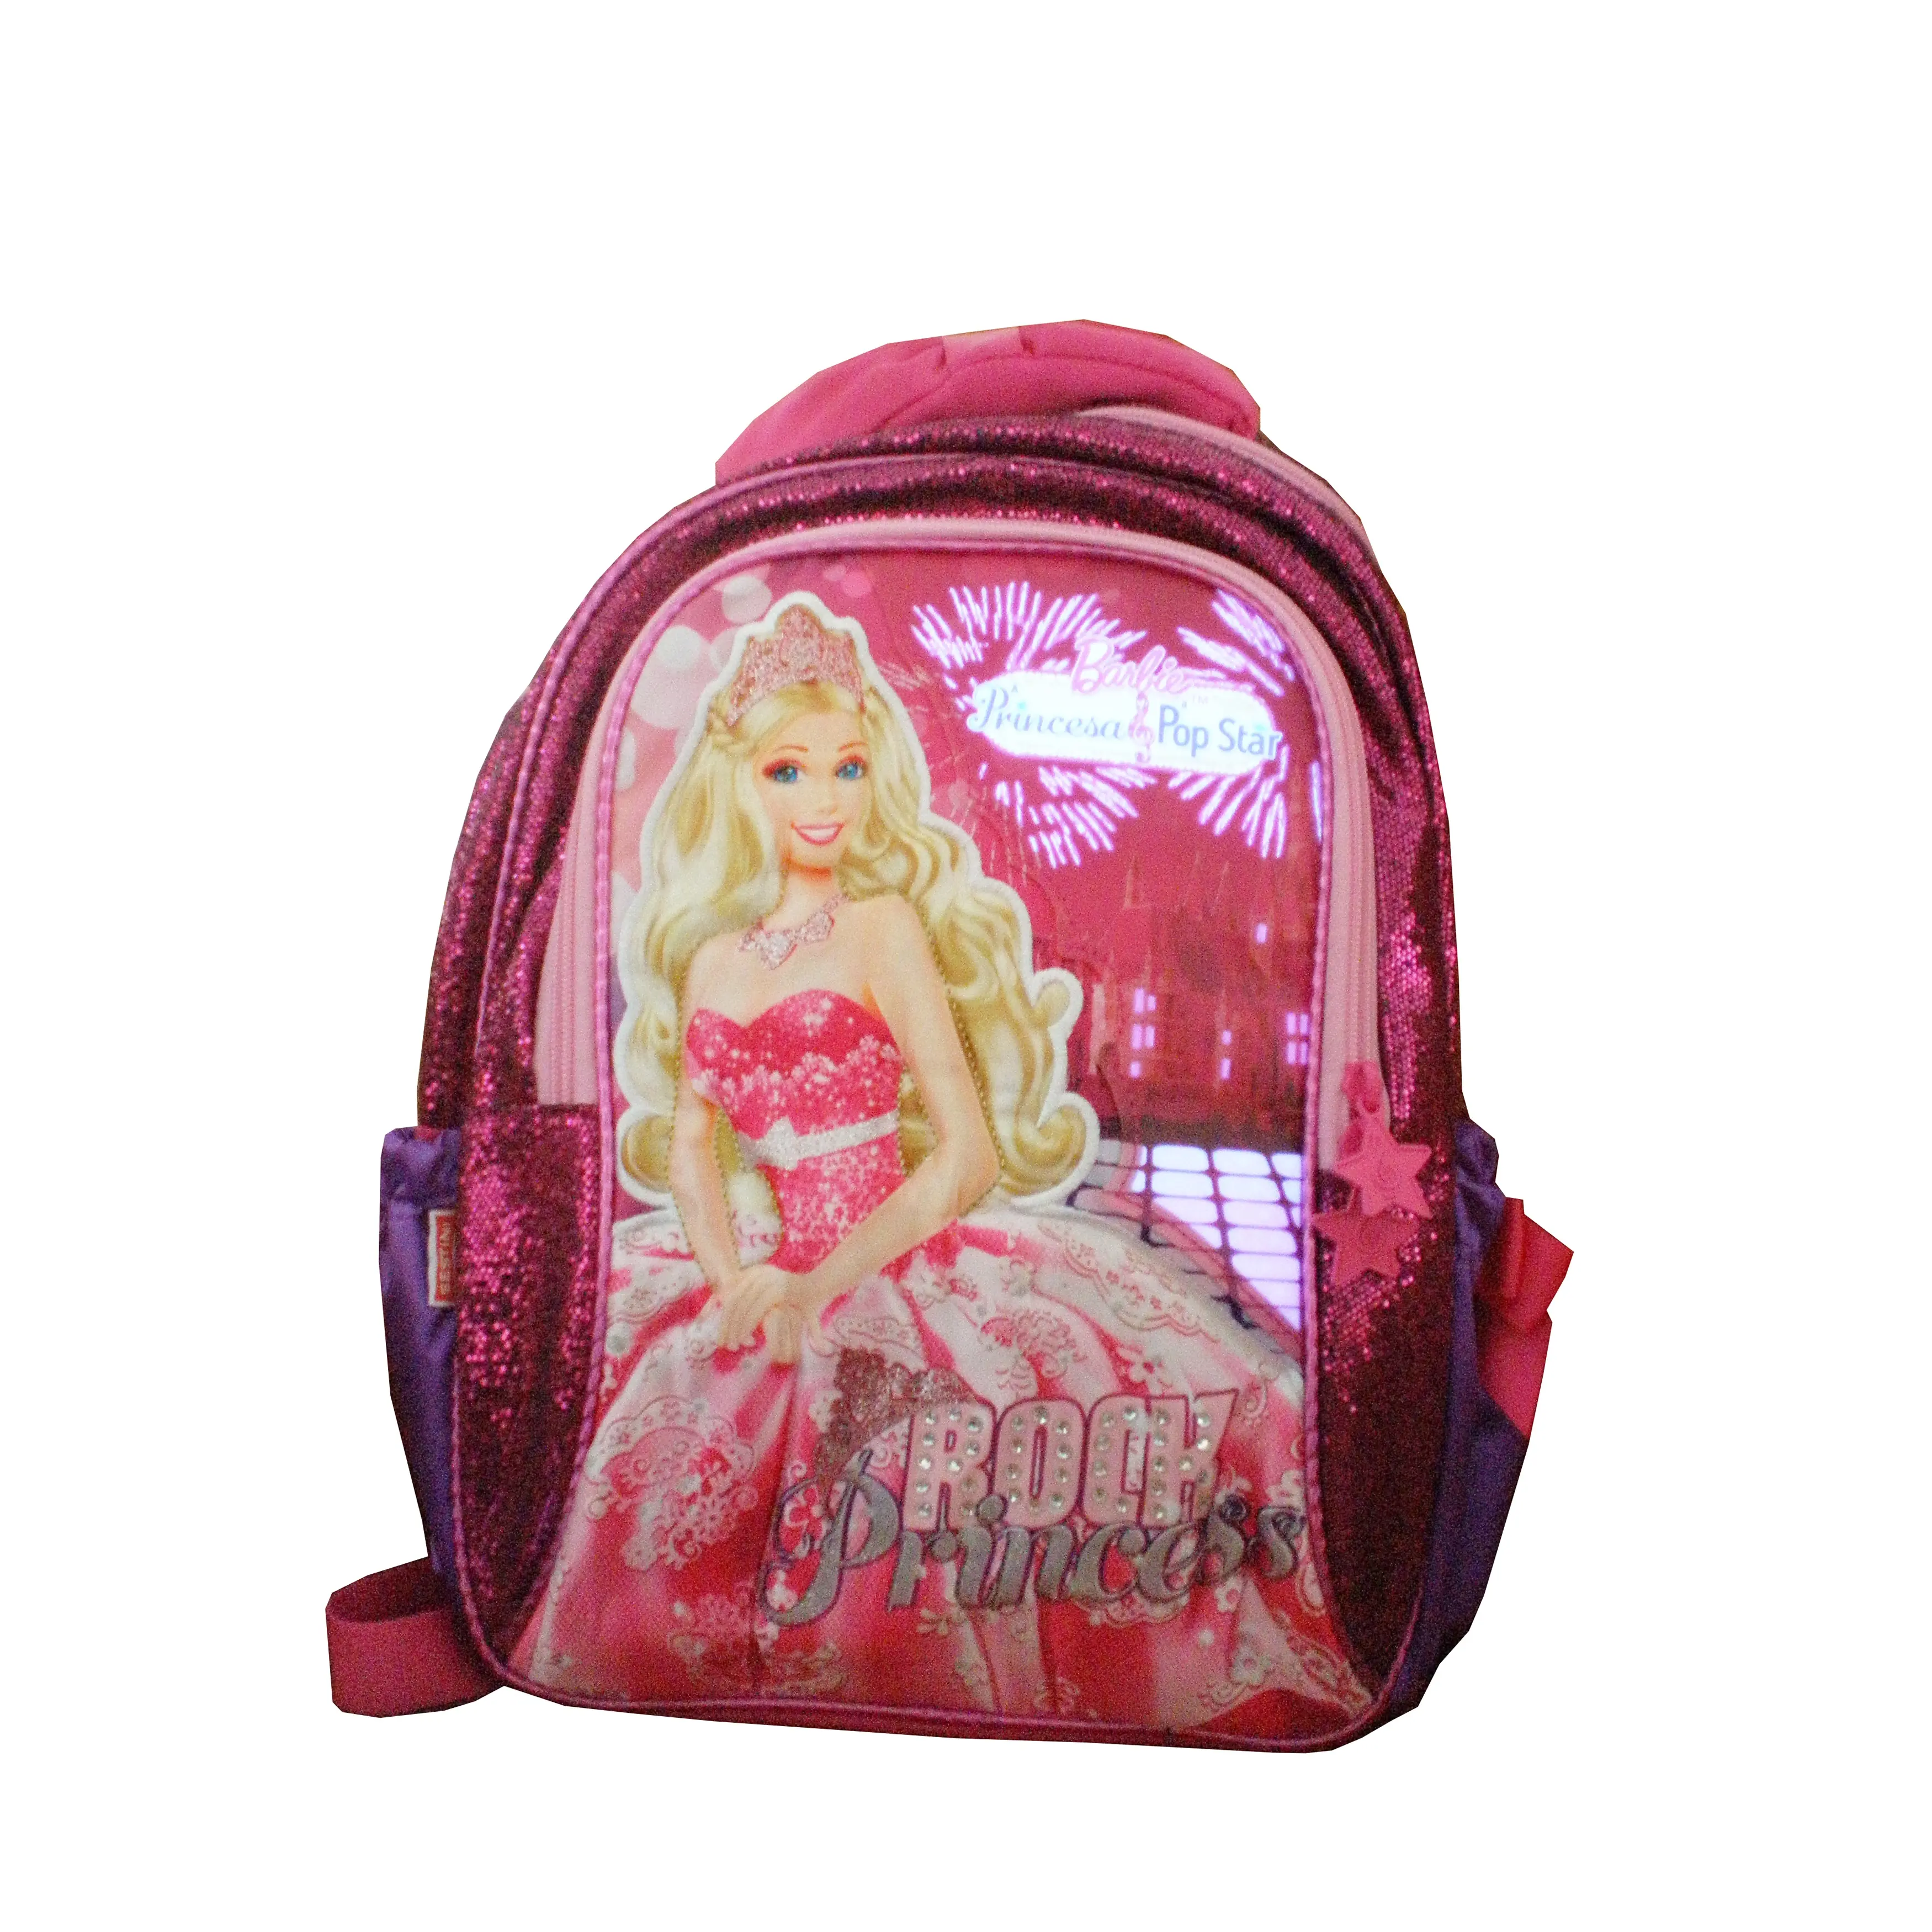 customized blingbling children backpack bag EL panel flash lighting sound music satchel school bag